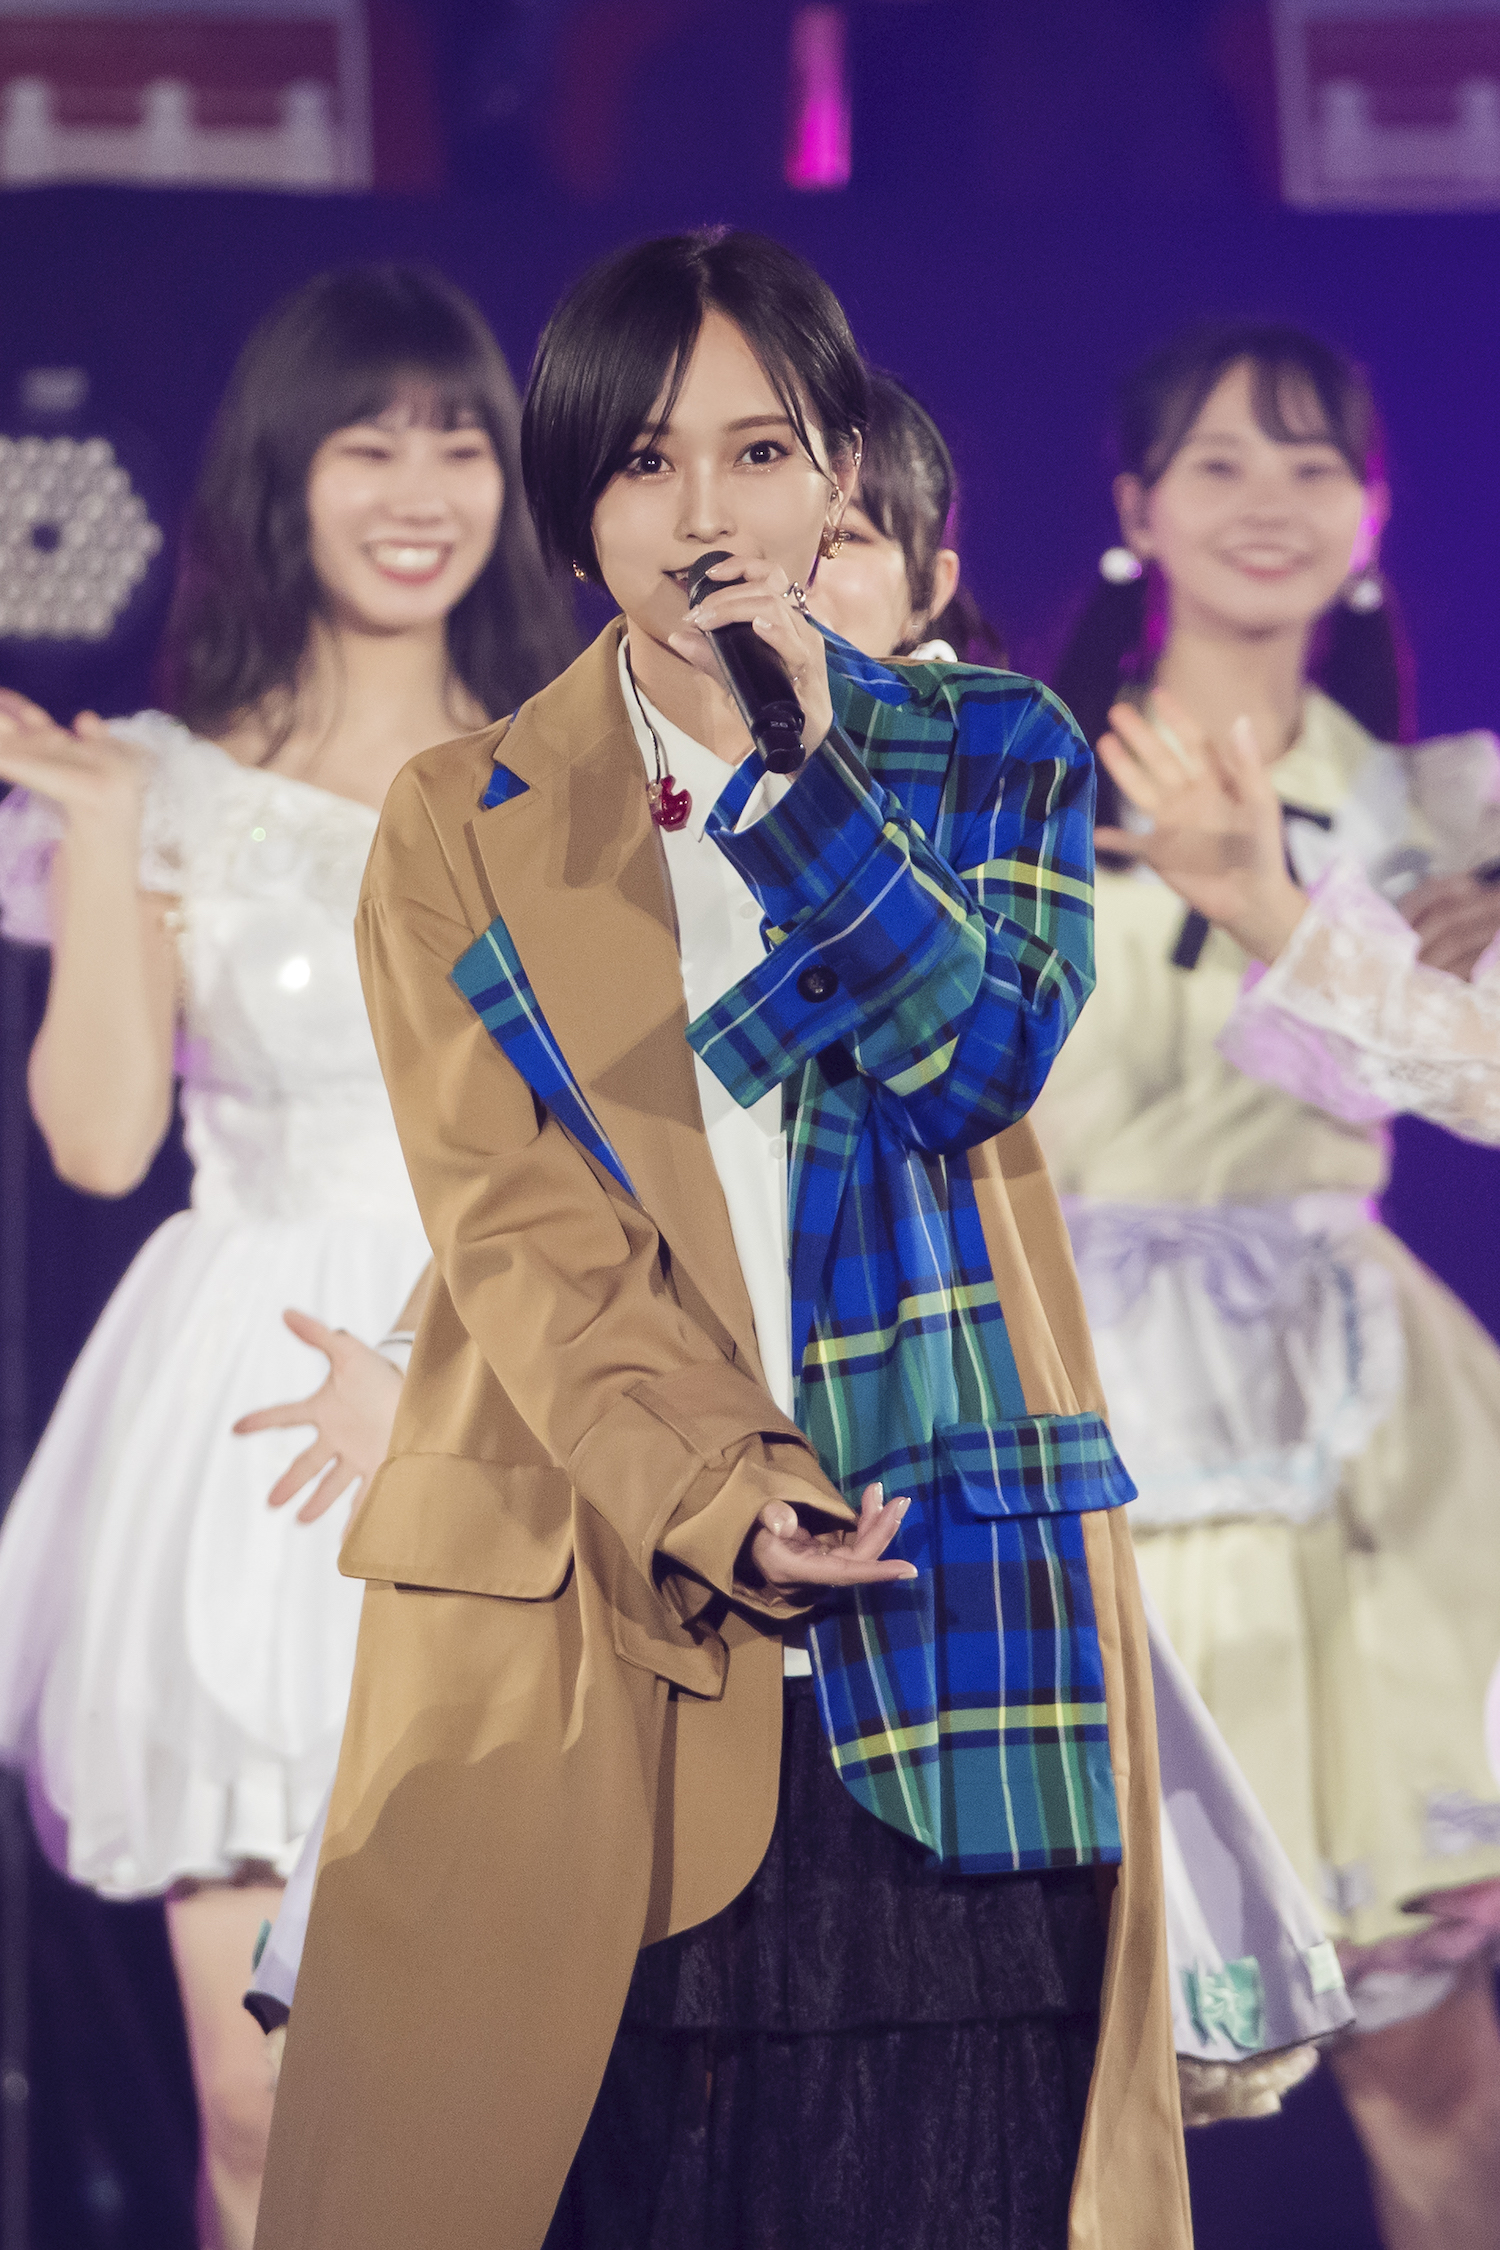 NMB48の10周年記念ライブ『NMB48 10th Anniversary LIVE 〜心をひとつに、One for all,All for one〜』（2020年10月23日(金)、大阪城ホールにて）